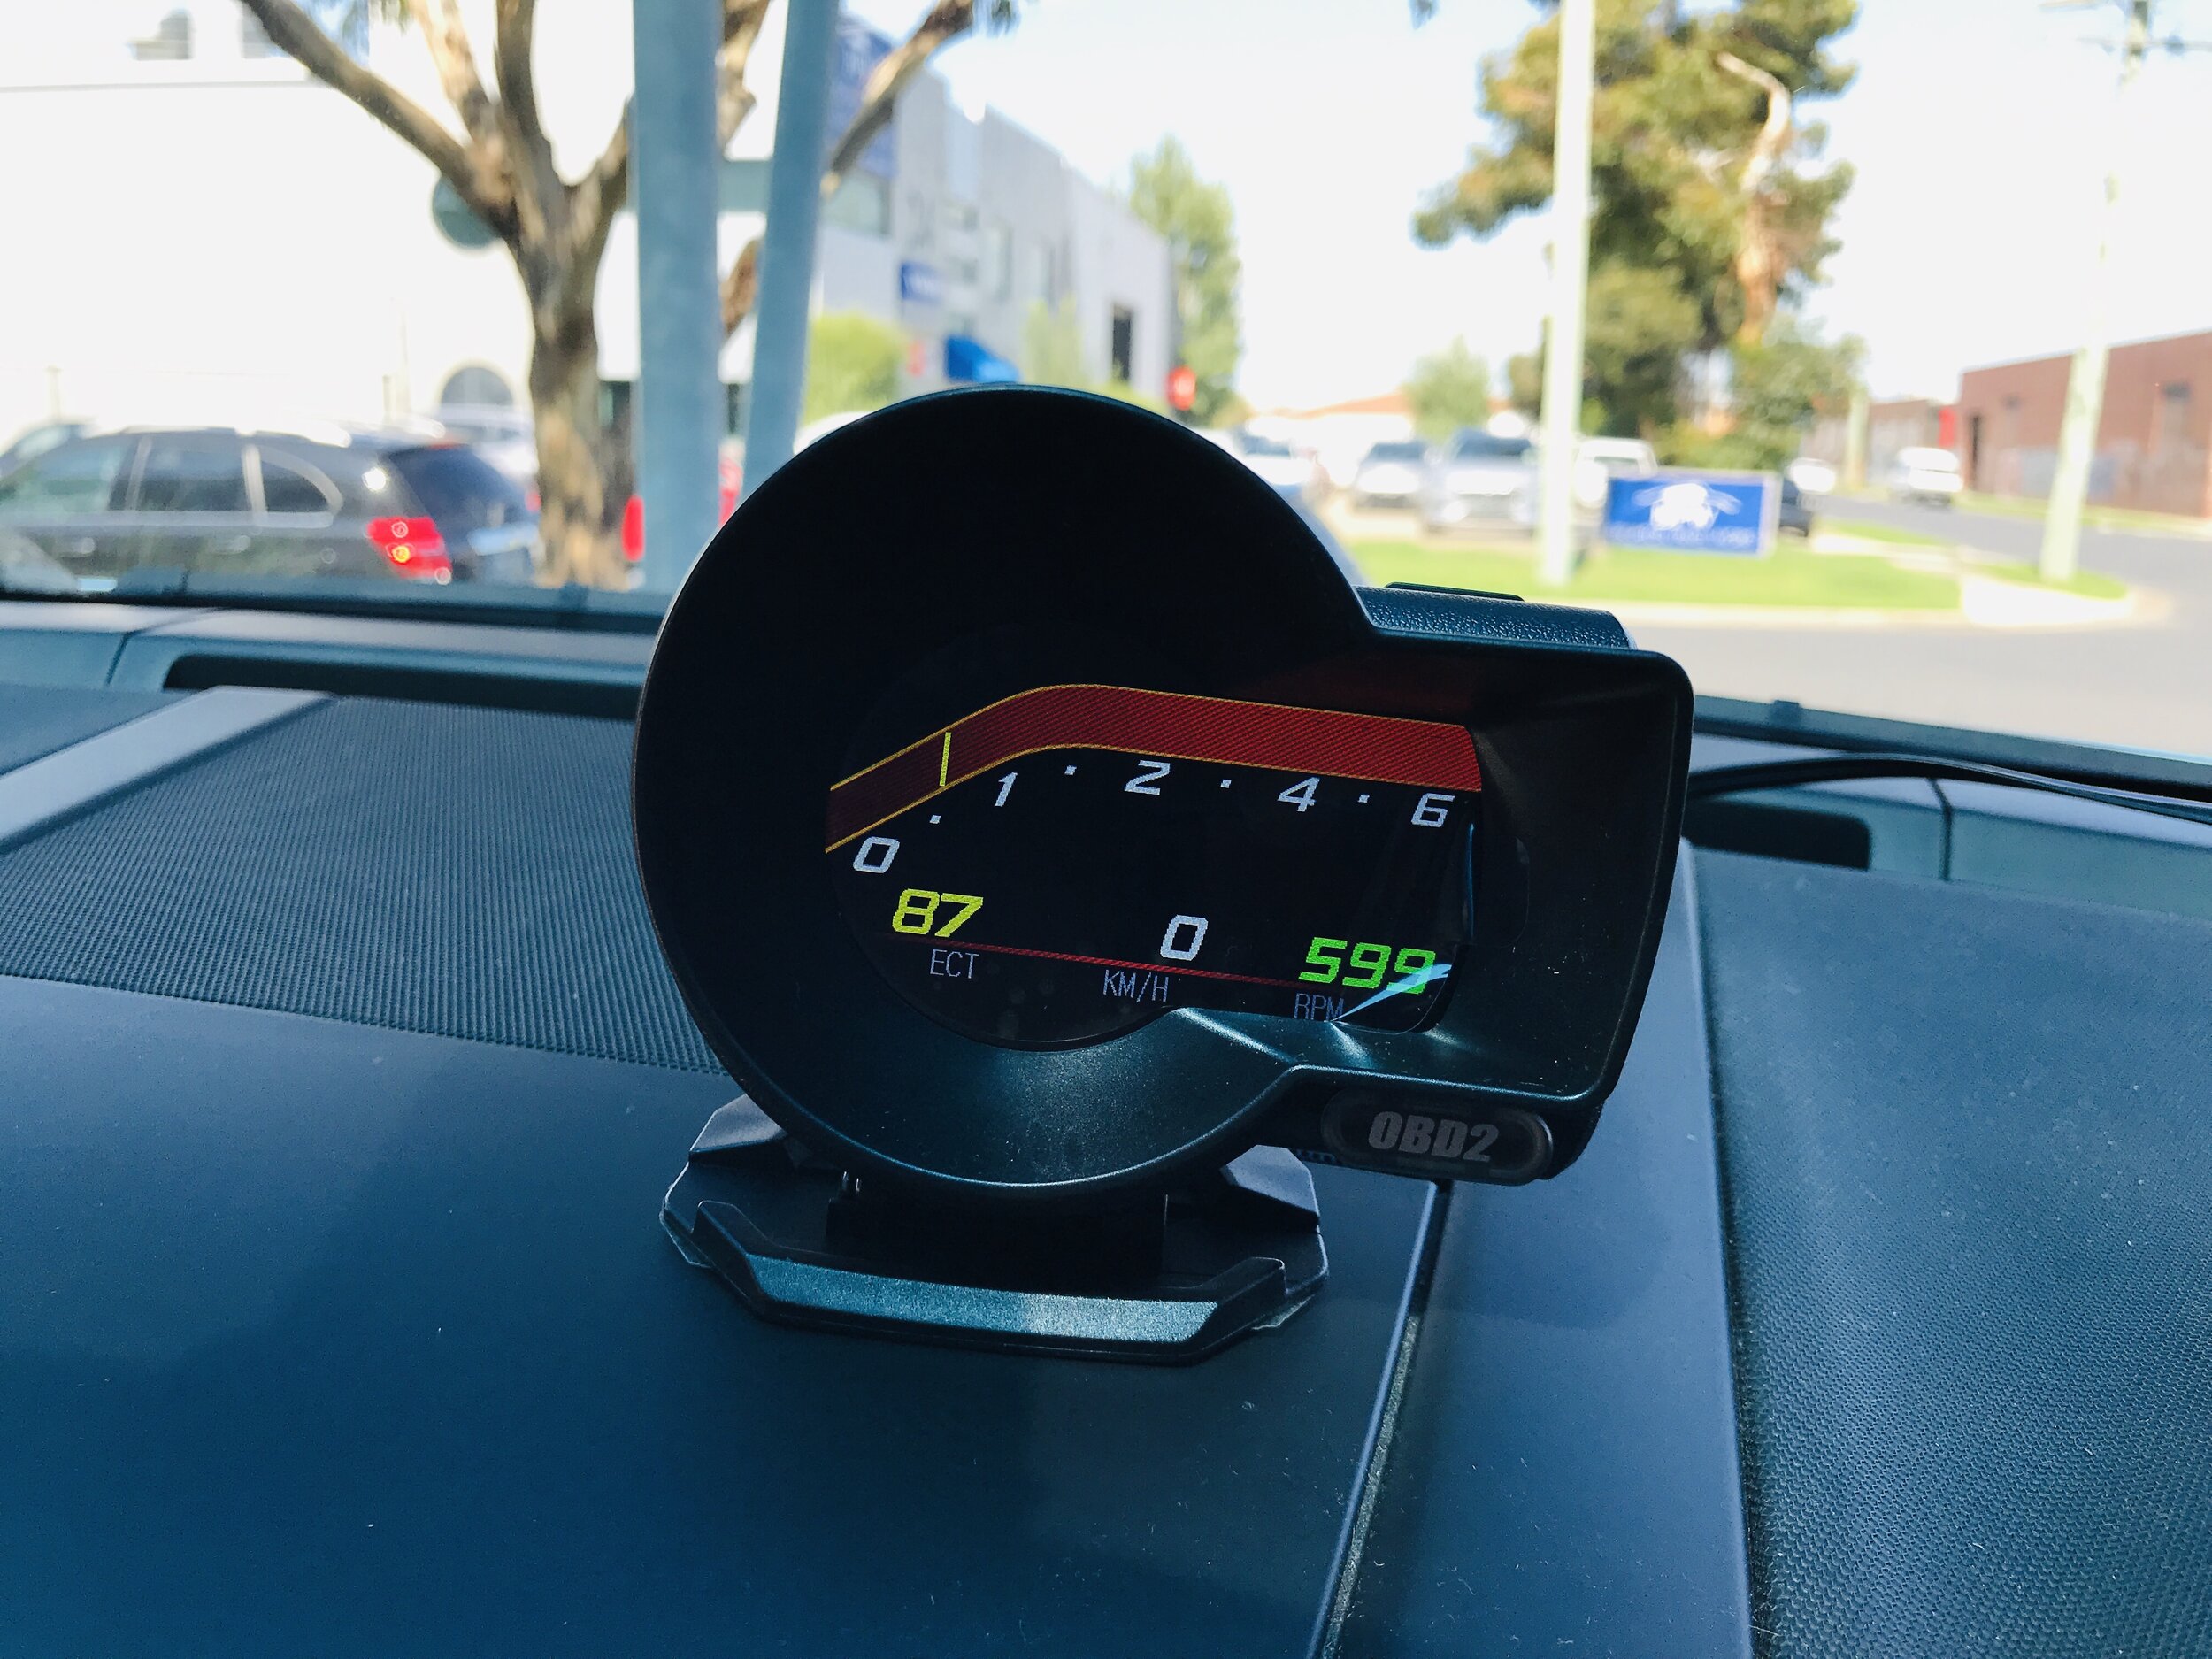 Car HUD Gauge Smart Digital Meter Speedometer High Definition Multifunction Meter Alarm Function for Vehicle with OBDII Standard Read Data Flow Fault Alarm Fault Clearing 